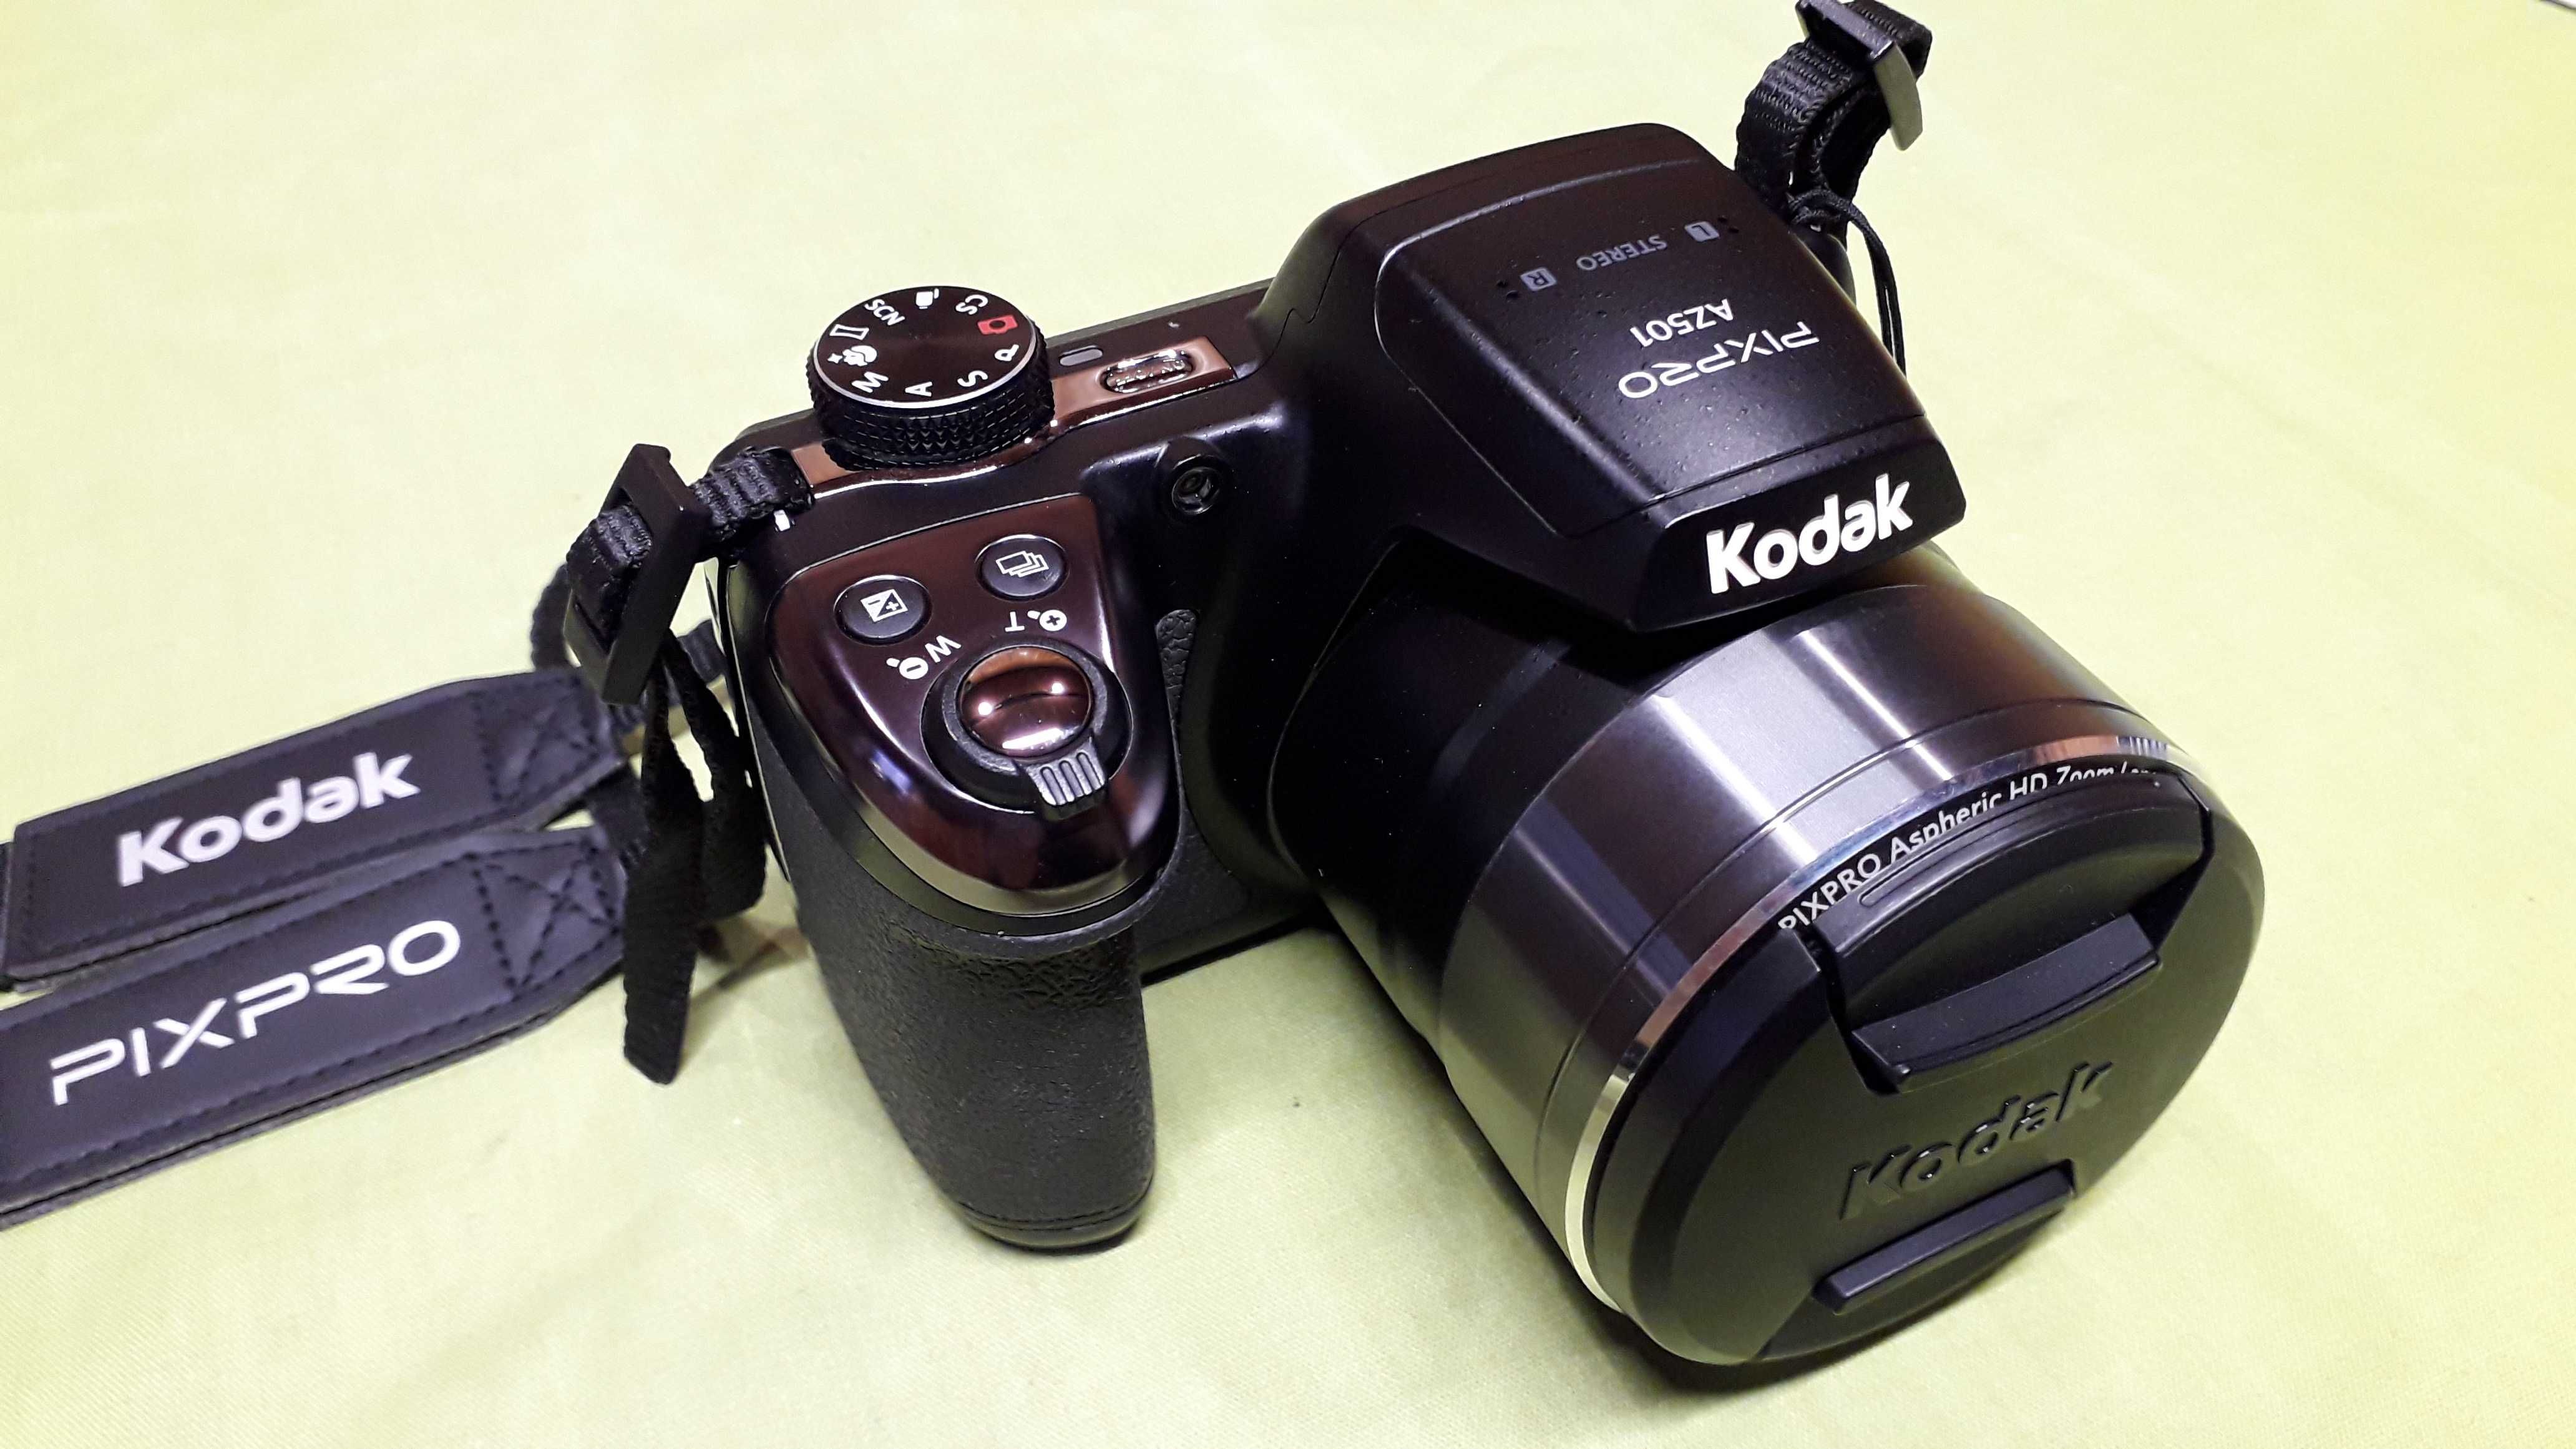 Kodak pixpro AZ501  aparat cyfrowy,torba, ładowarka,8GBkarta  jak nowy